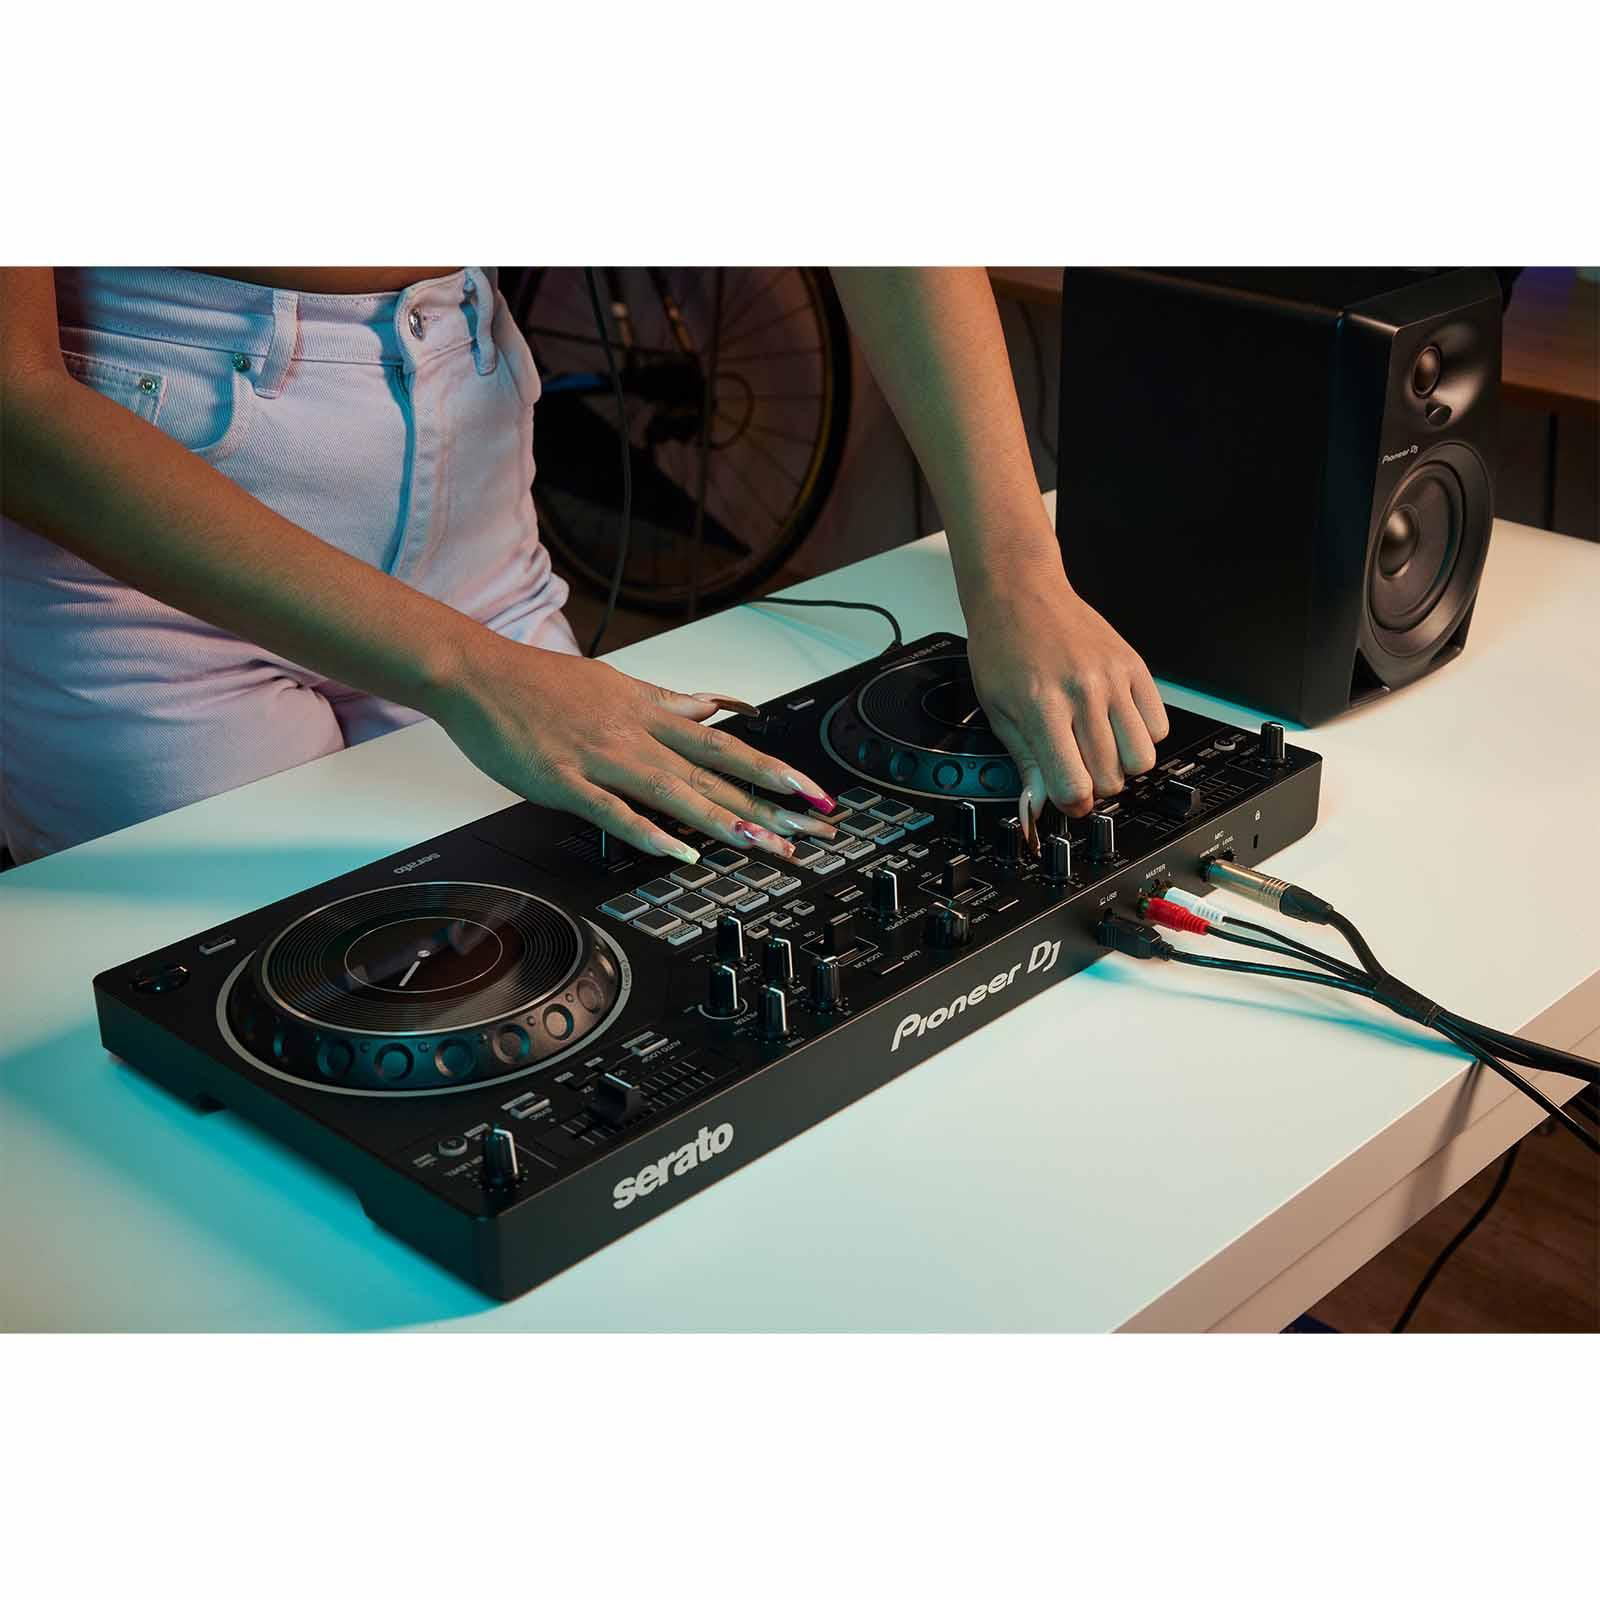 Pioneer DJ DDJ-REV1 Scratch Style 2-Channel DJ Controller with 